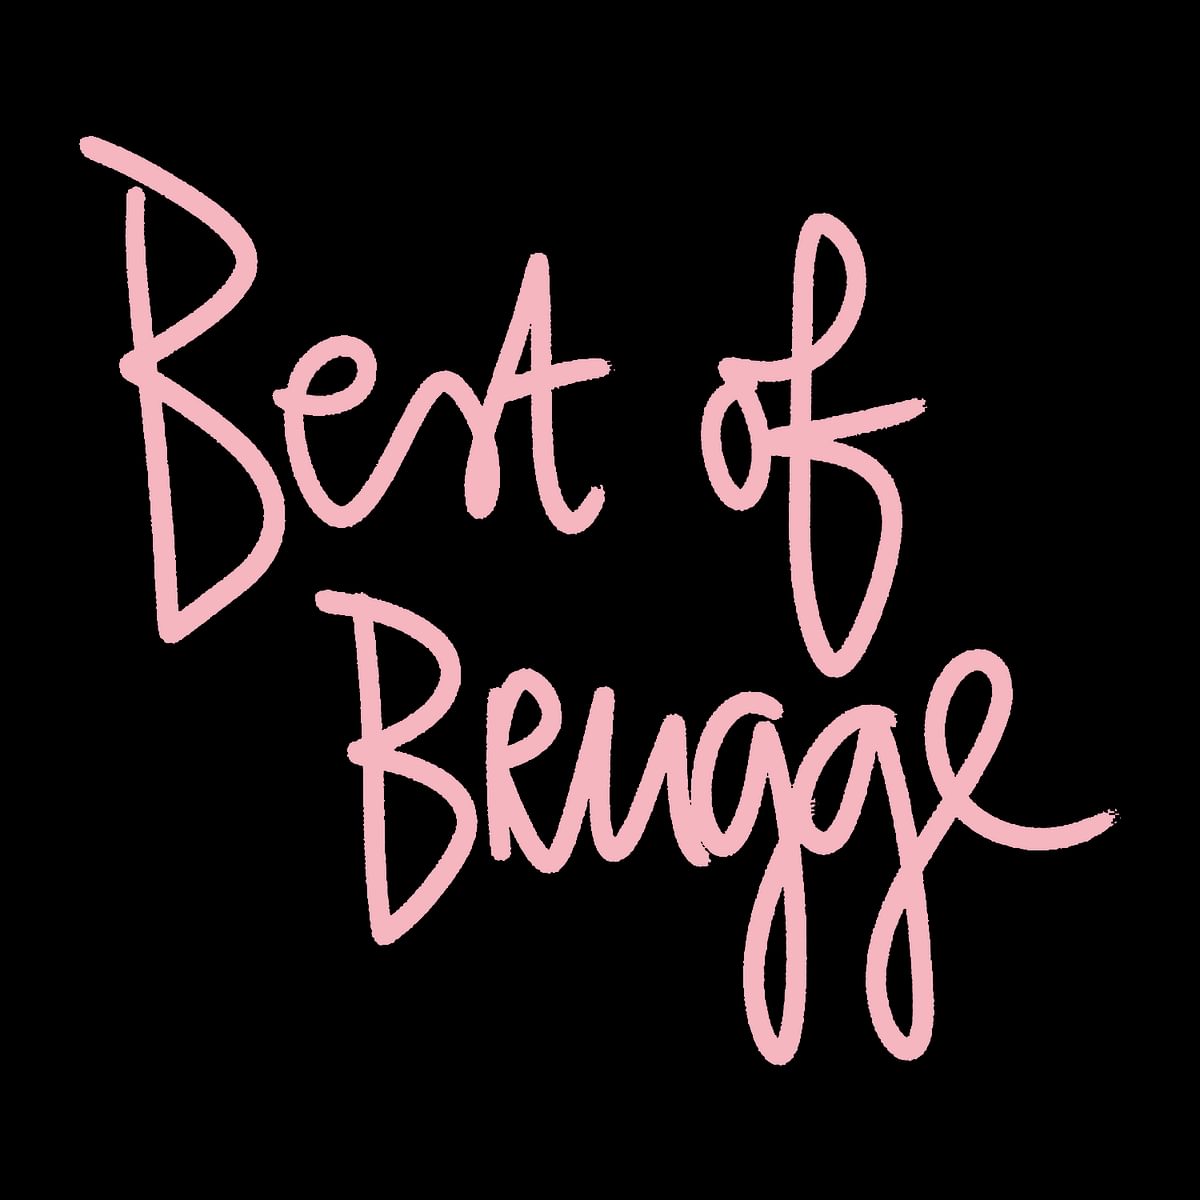 Best of Brugge